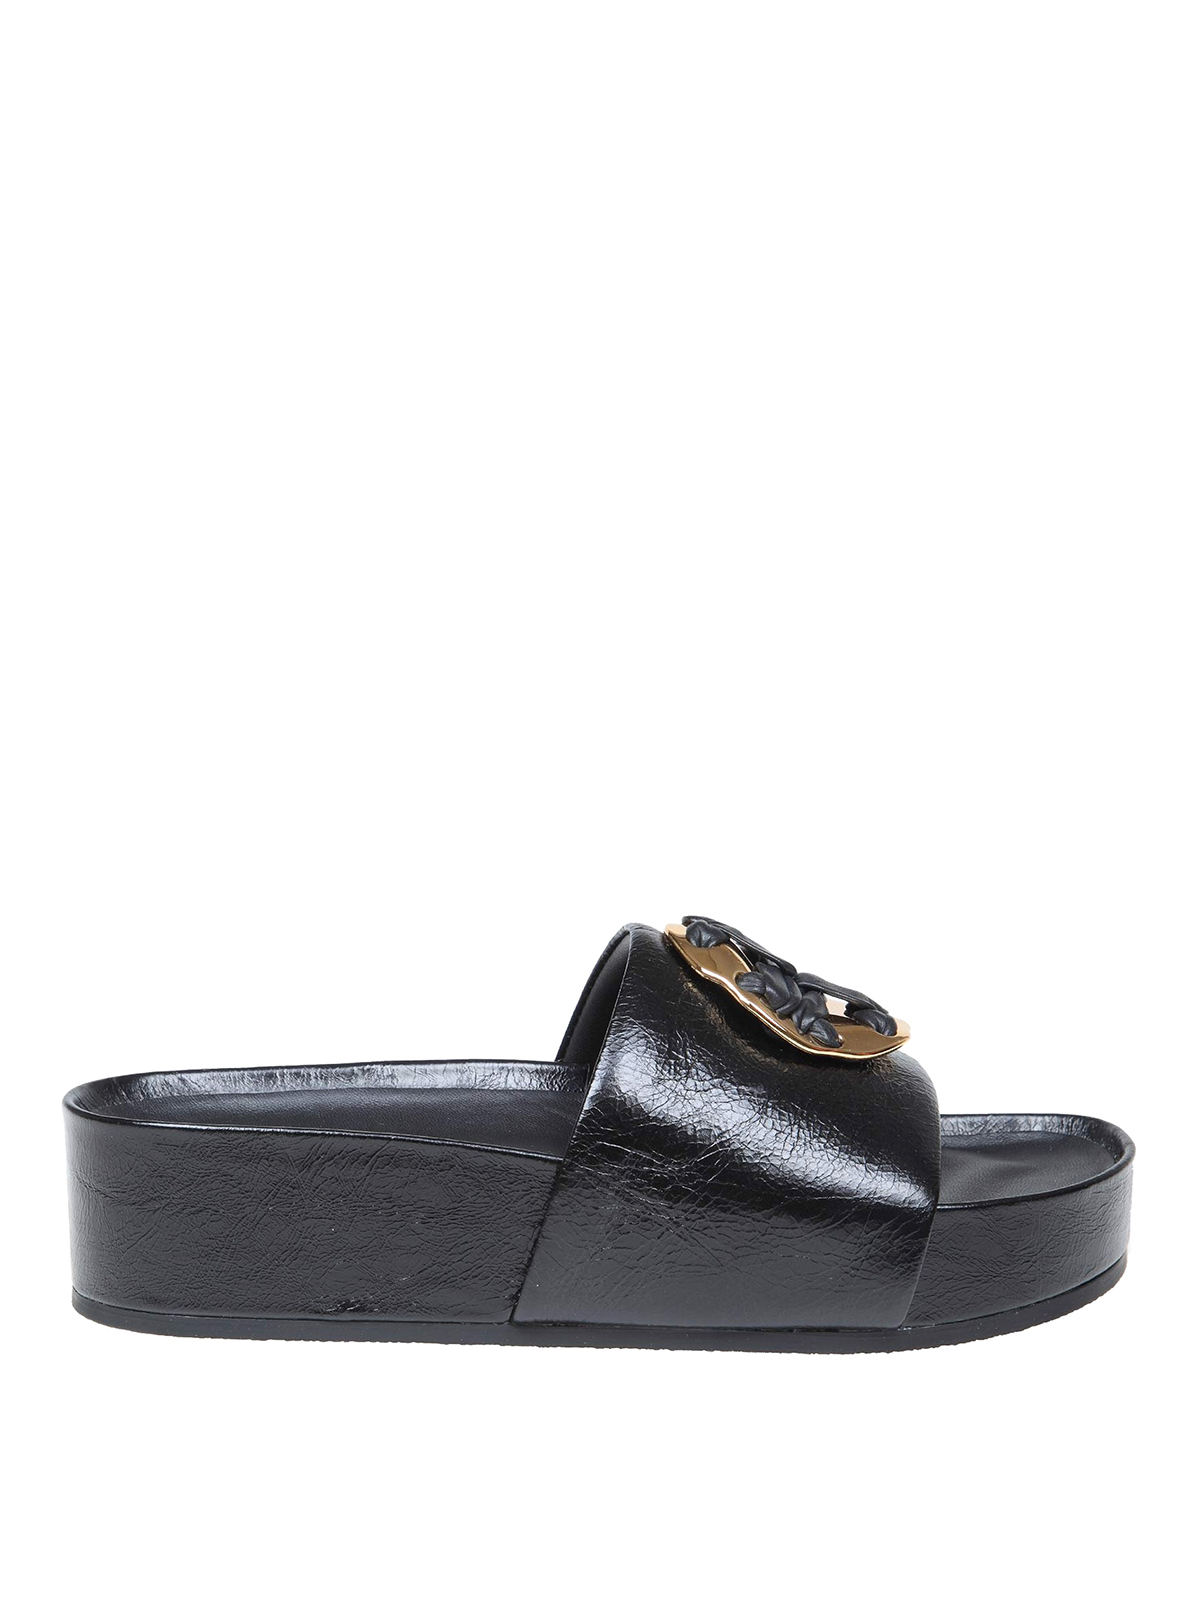 Sandals Tory Burch - Leather sandal - 144148006 | Shop online at iKRIX